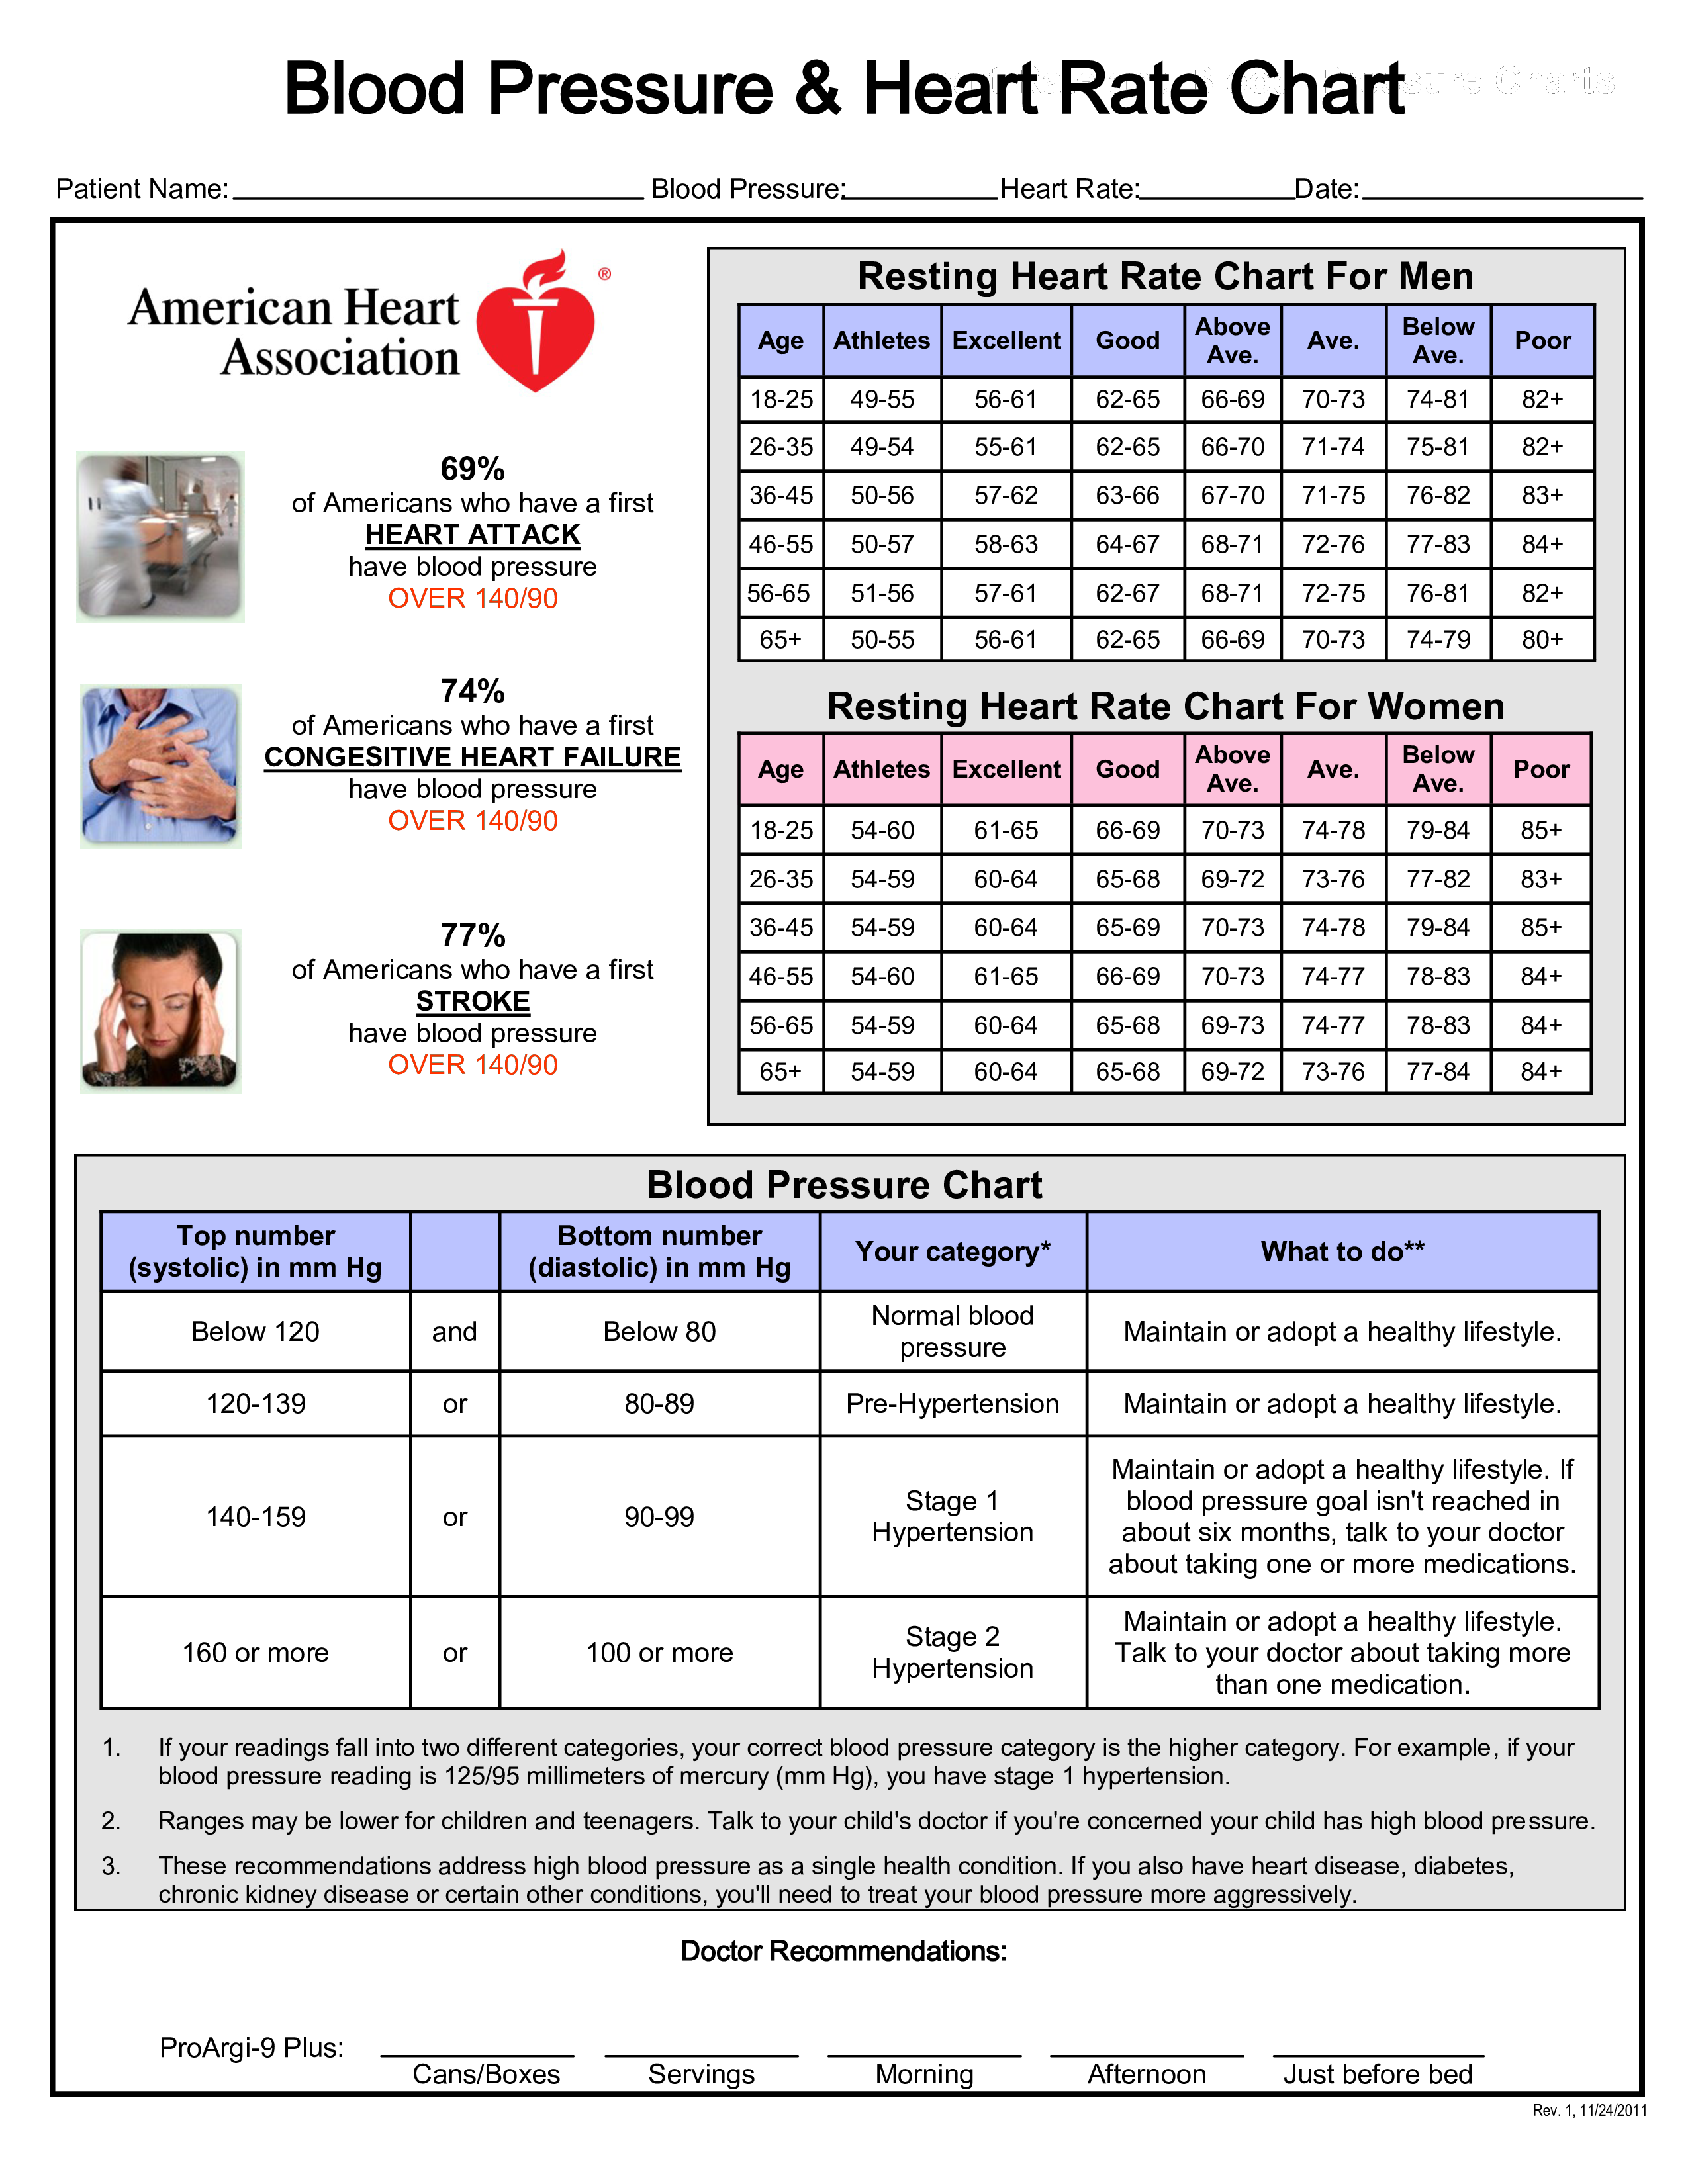 American heart association blood pressure chart